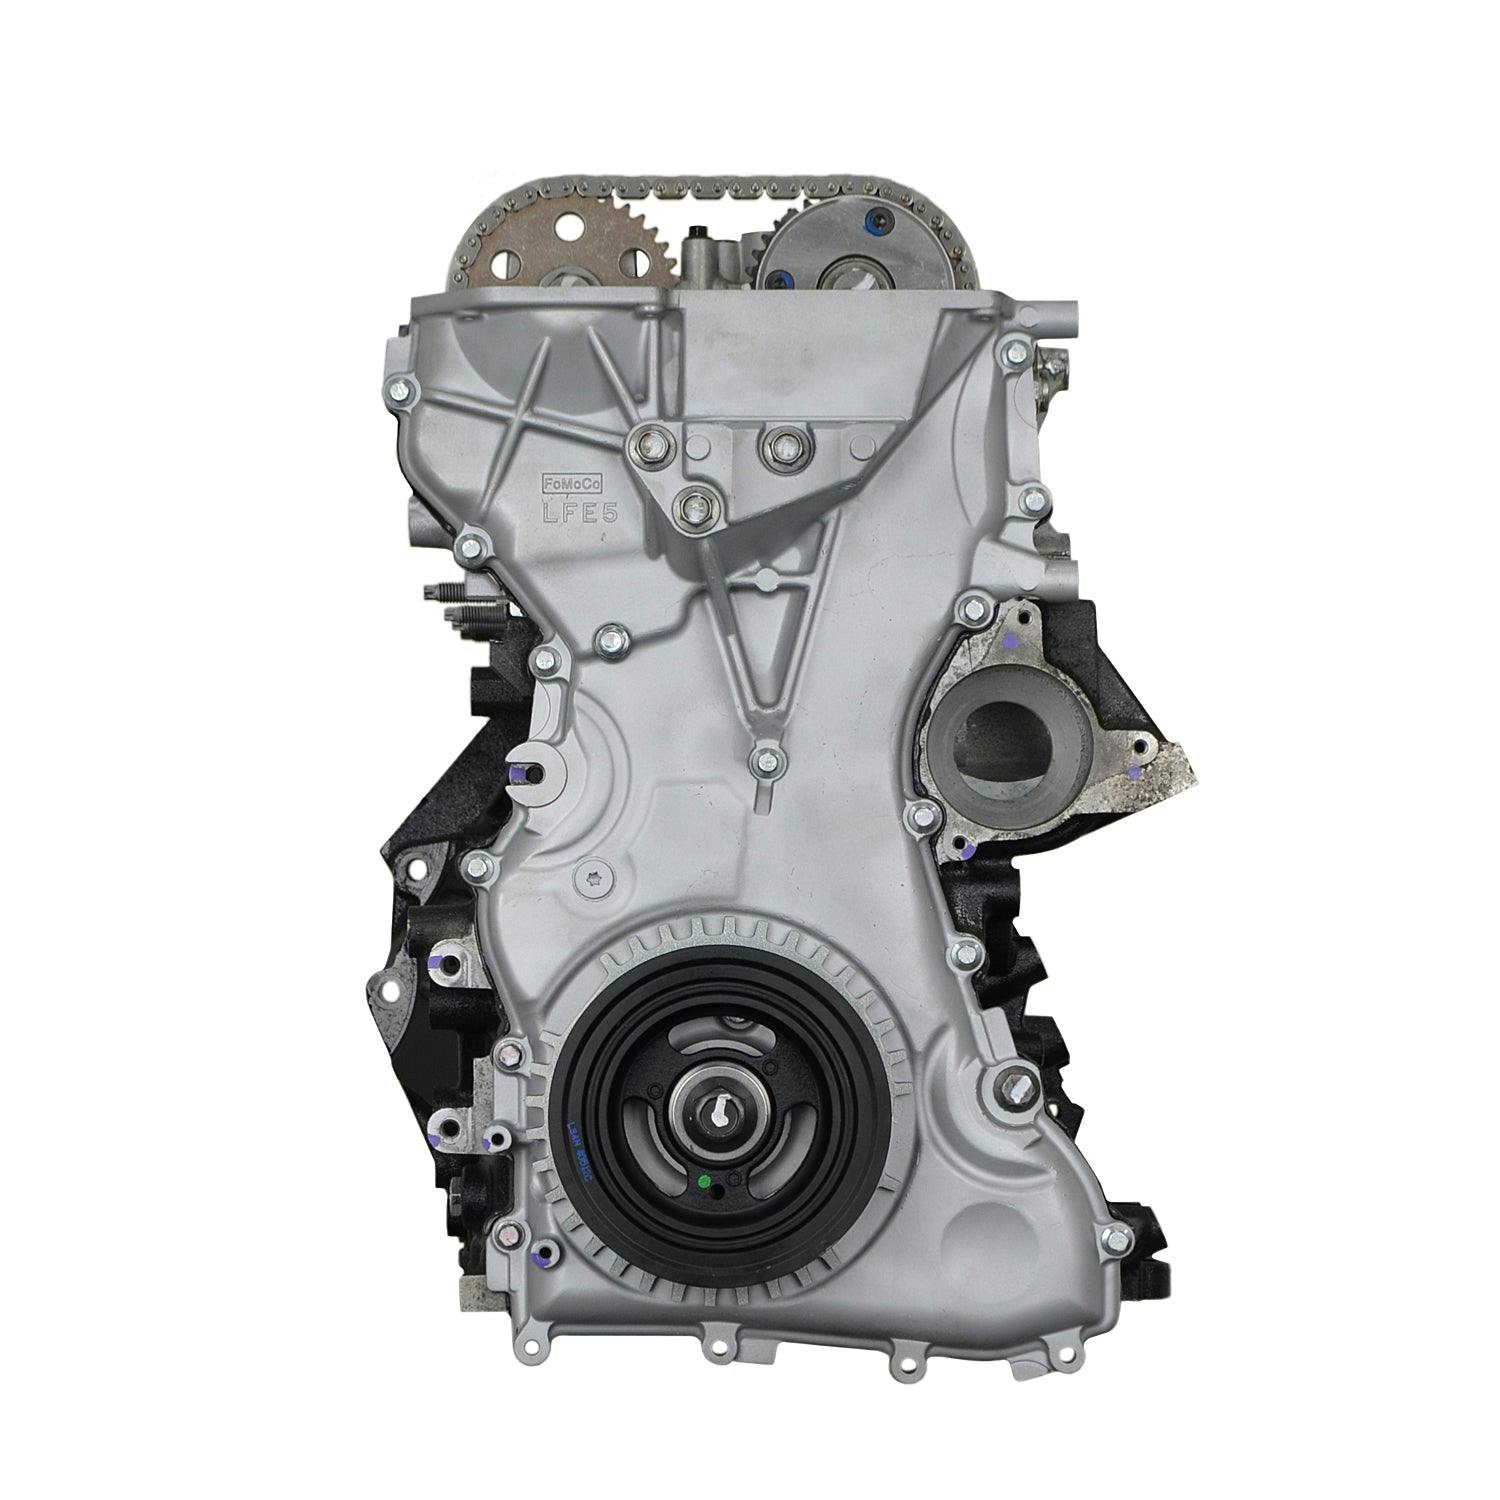 2L Inline-4 Engine for 2006-2013 Mazda 3